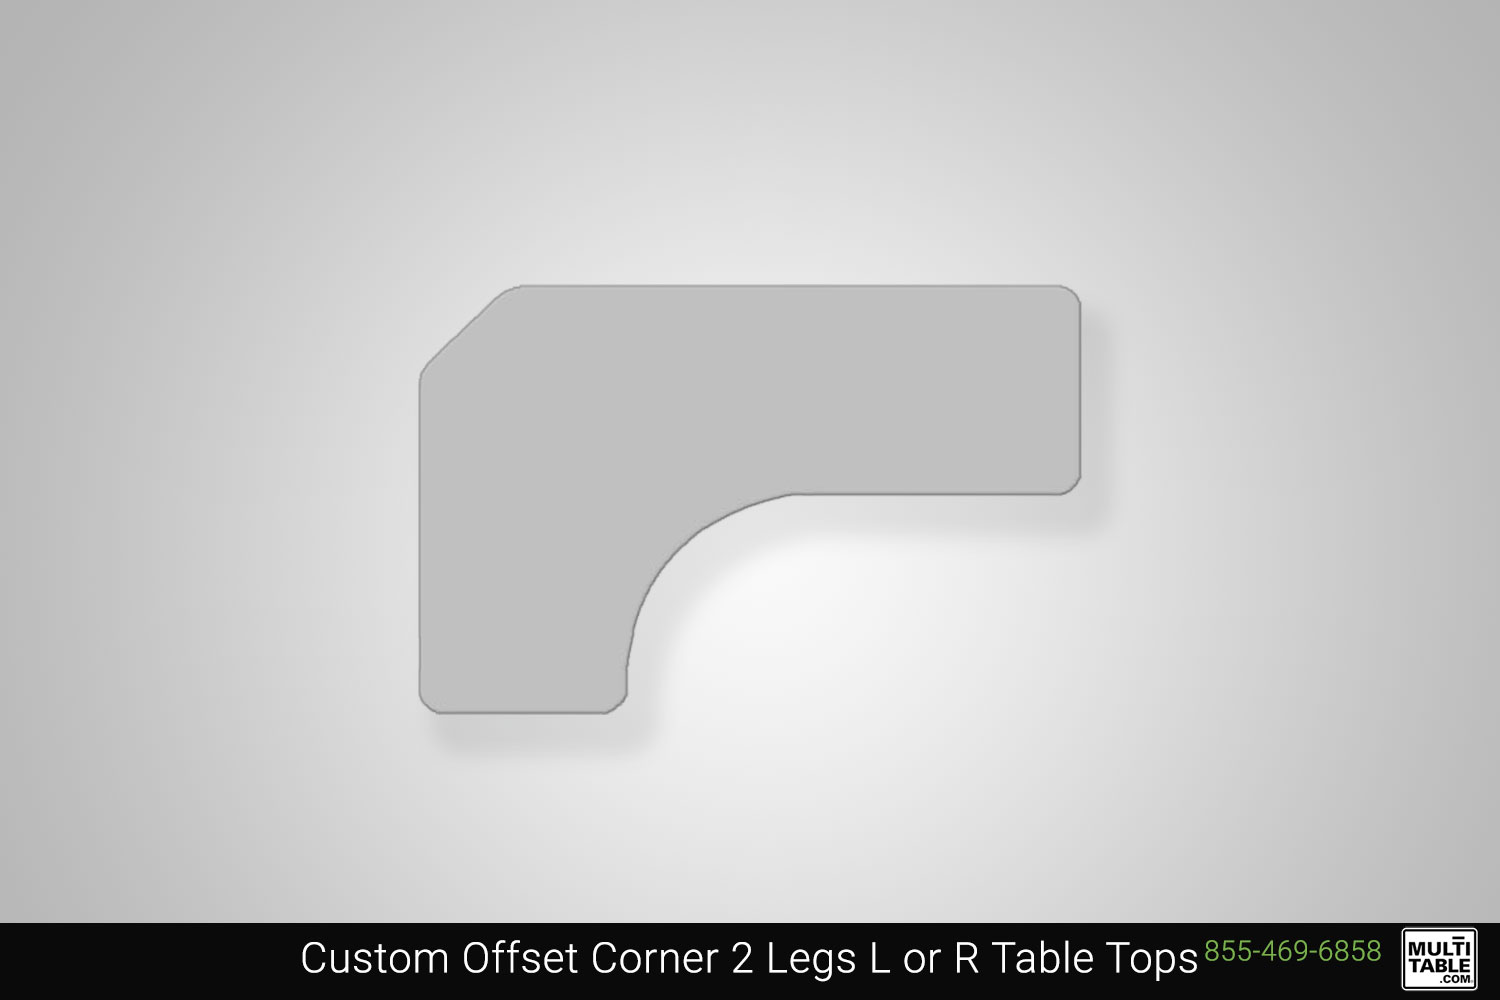 Custom Offset Corner 2 Legs L Or R Standing Desk Table Top Shape Options MultiTable Office Furniture Manufacturing Phoenix Arizona Since 2010